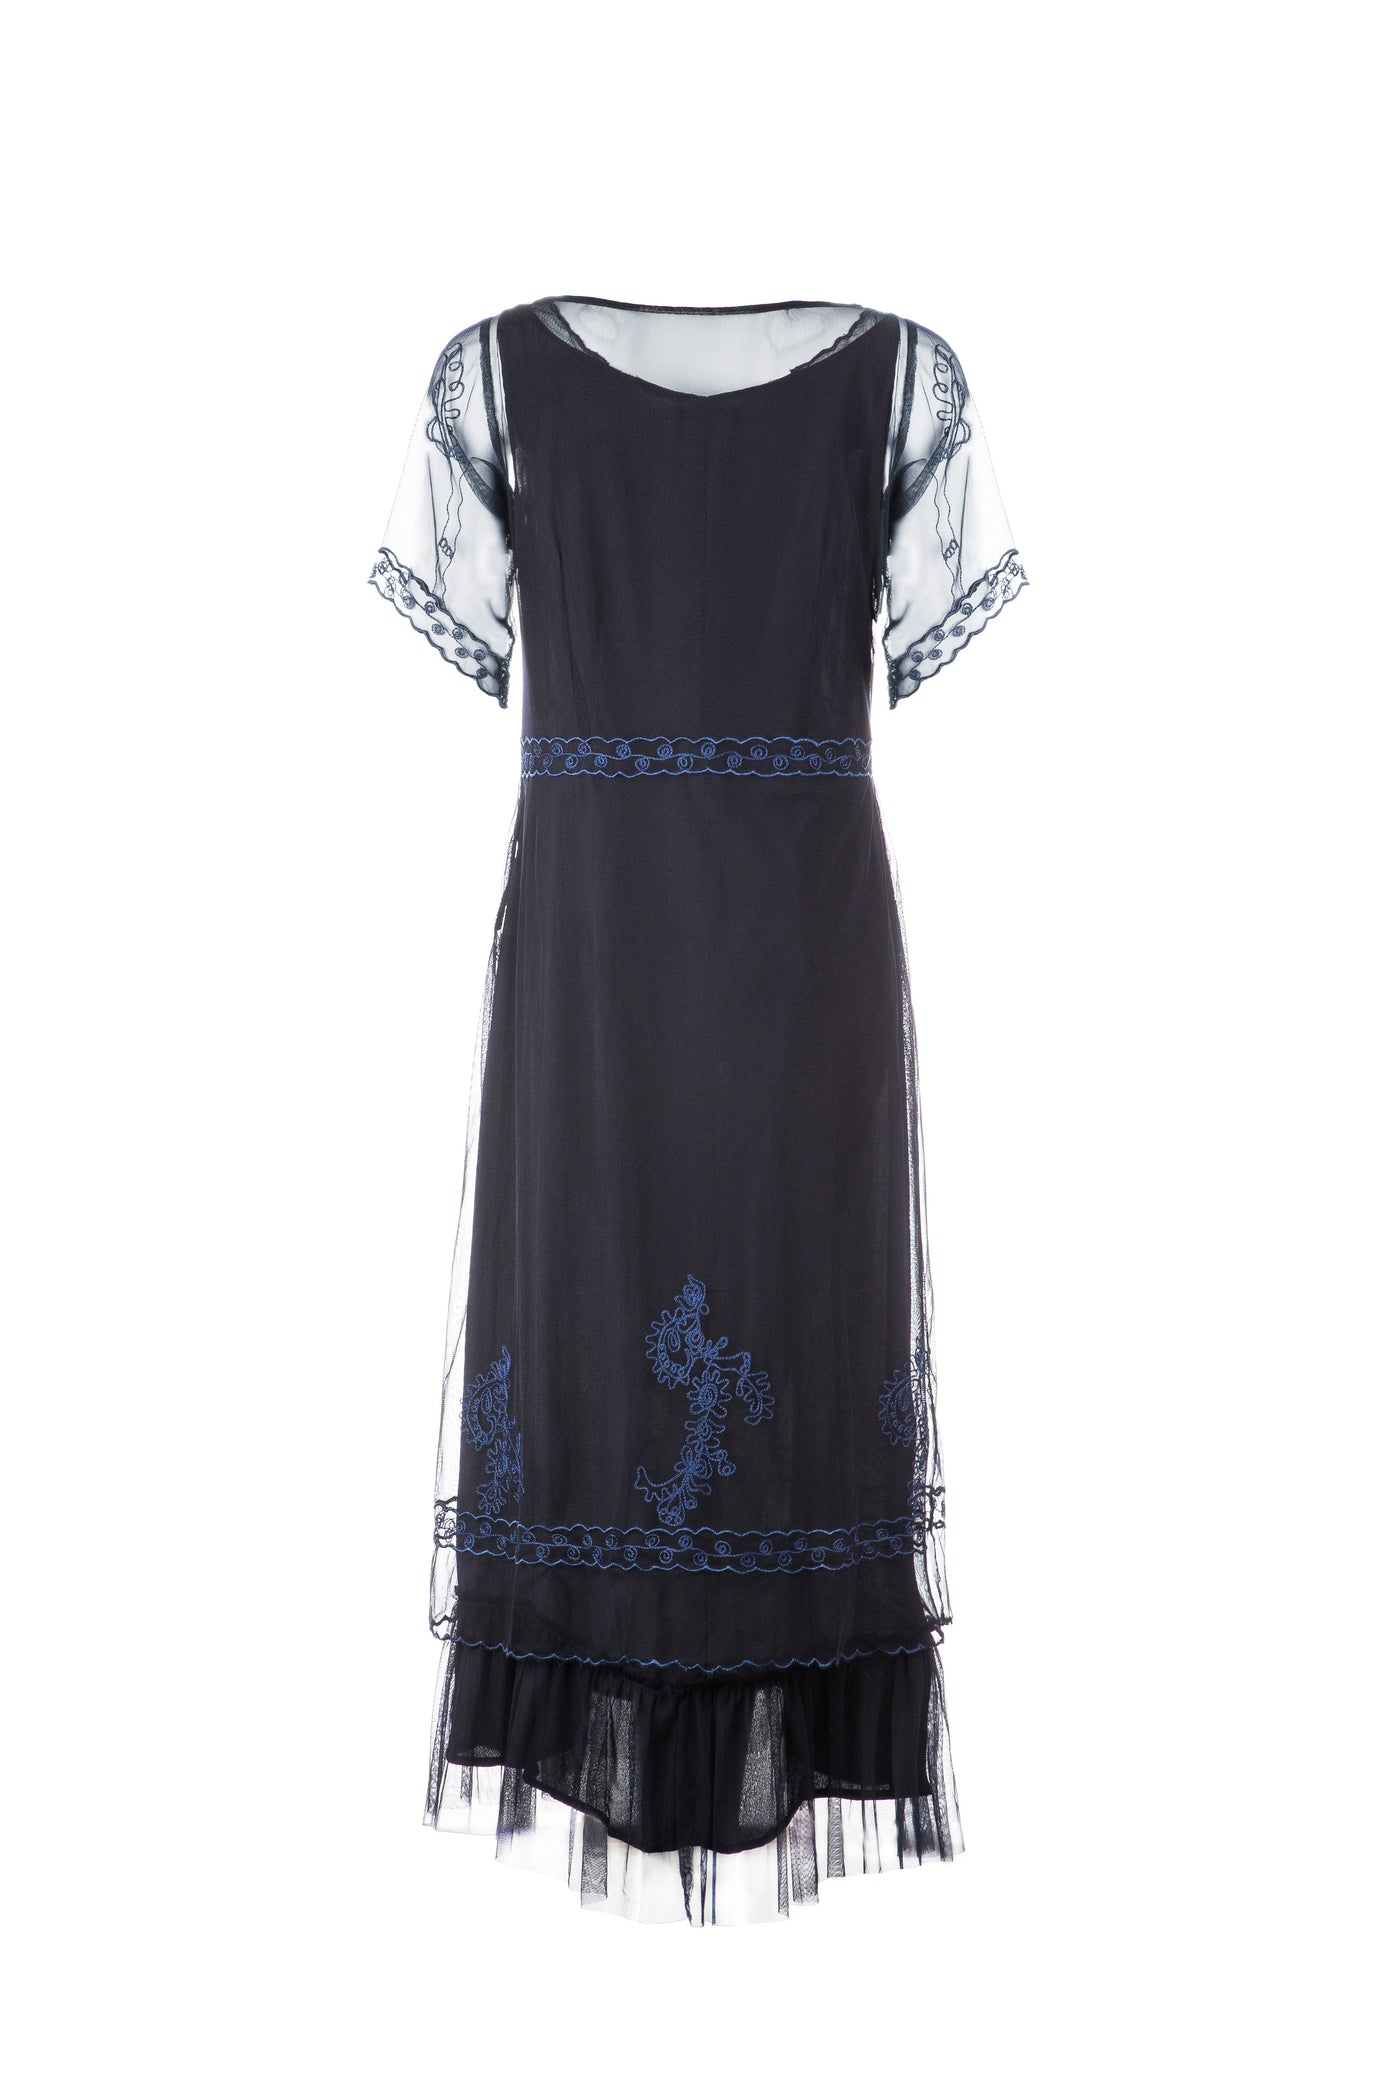 Nataya Rachel CL-168 Sapphire Dress